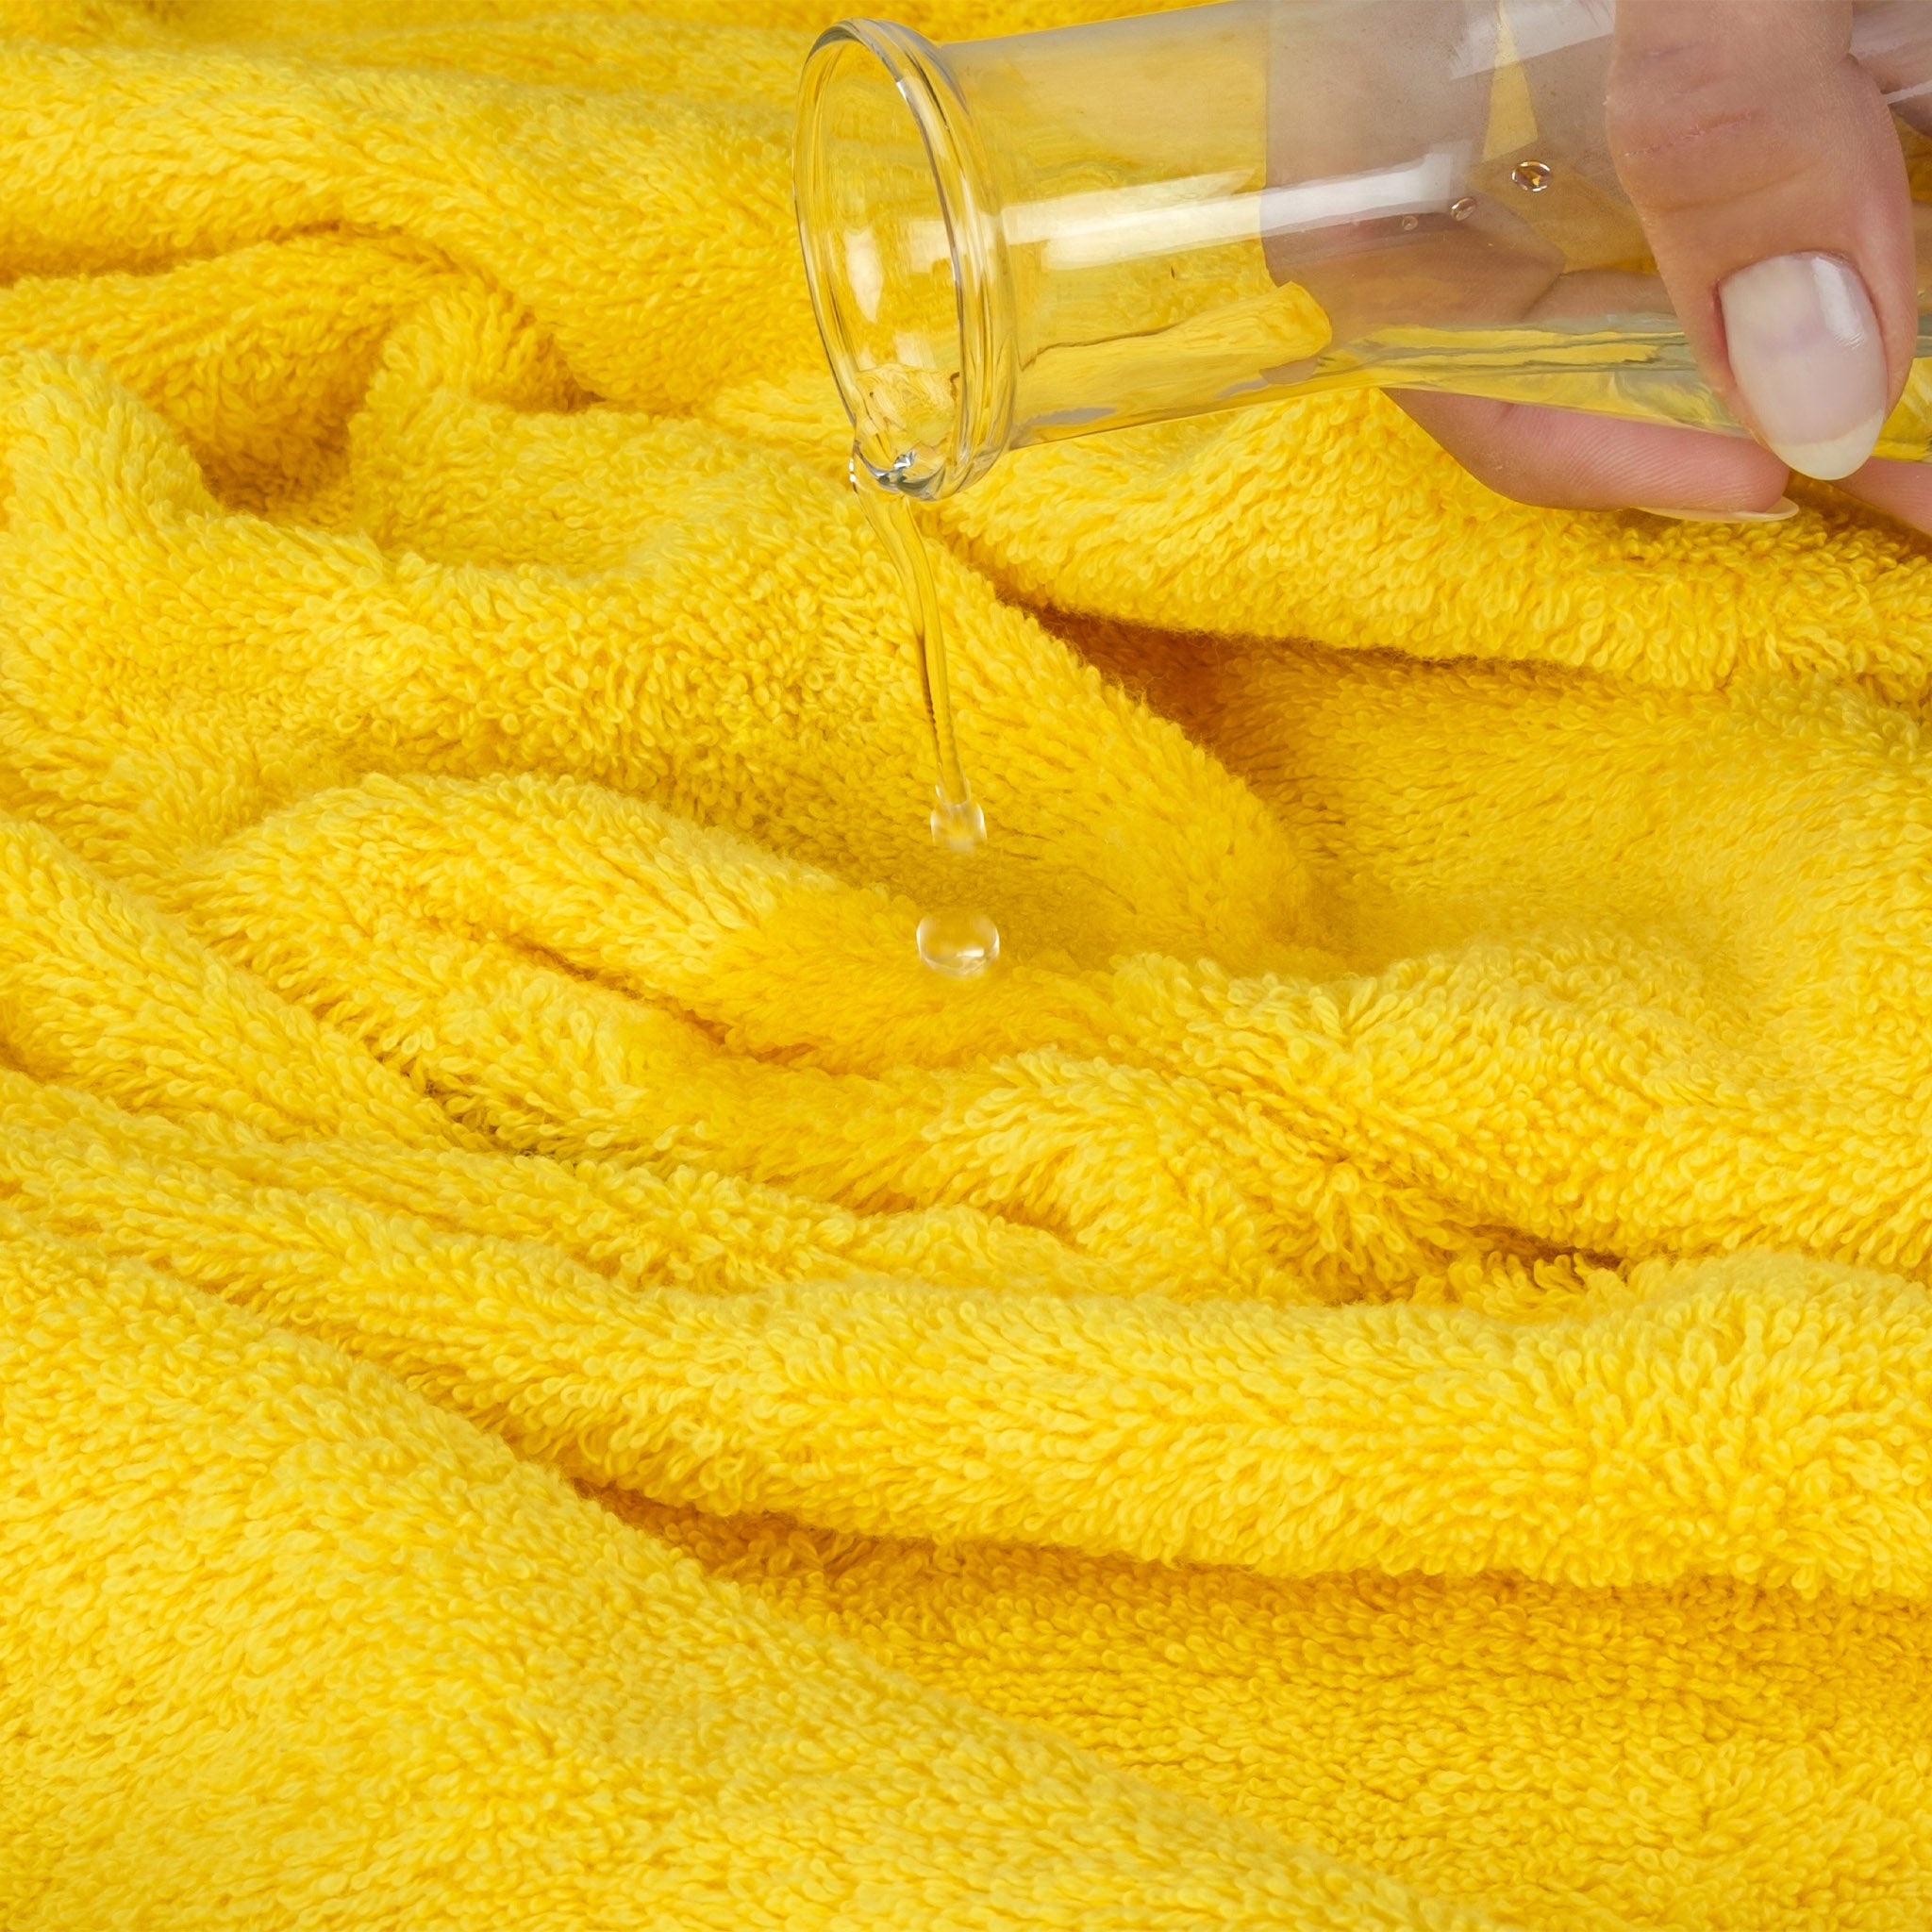  American Soft Linen 100% Turkish Cotton 4 Piece Washcloth Set - Wholesale - yellow-5